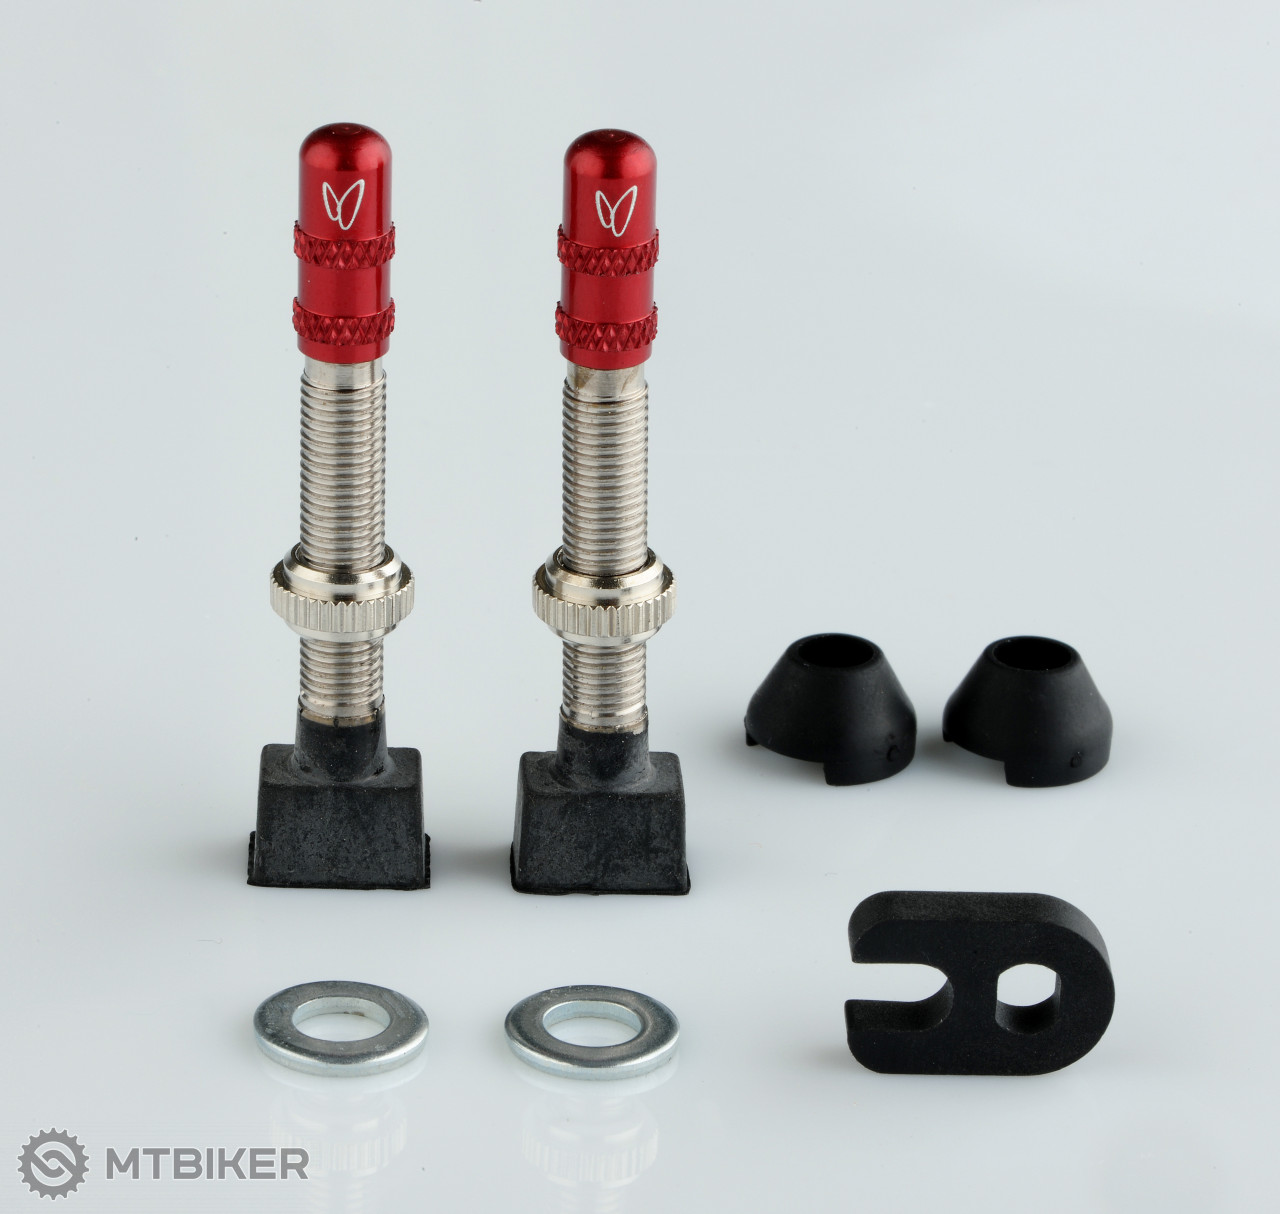 Effetto Mariposa Caffe tubeless ball valve 40 mm, silver/red - MTBIKER.shop